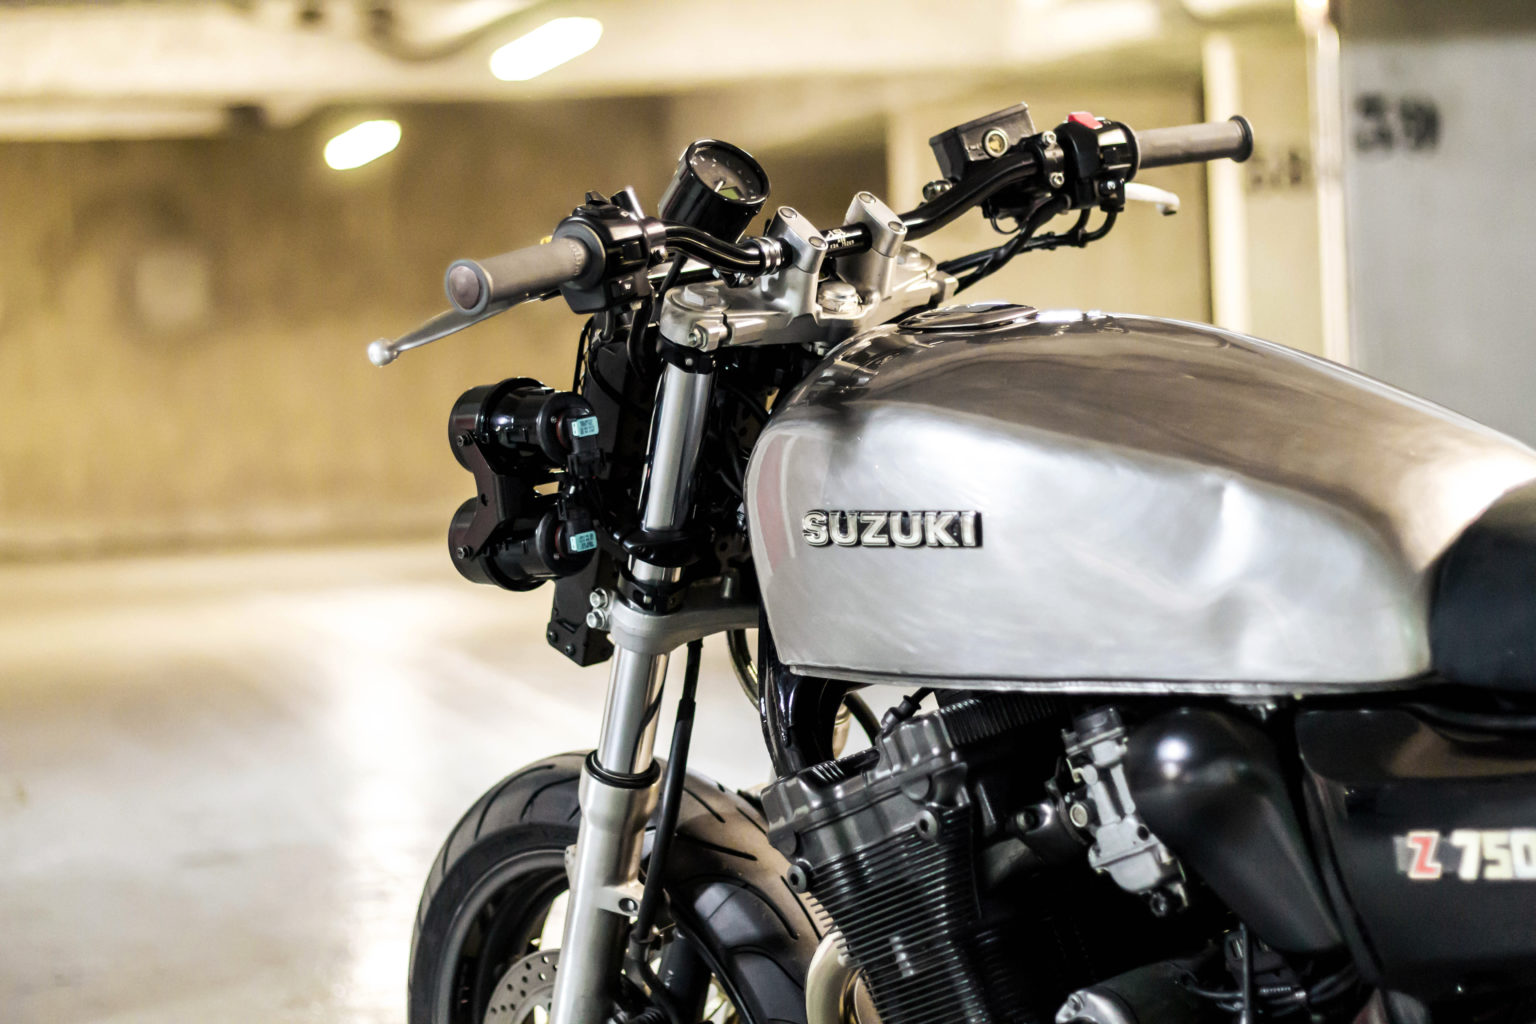 Suzuki GSX750 Inazuma "Zumax" by Banb Motorcycles